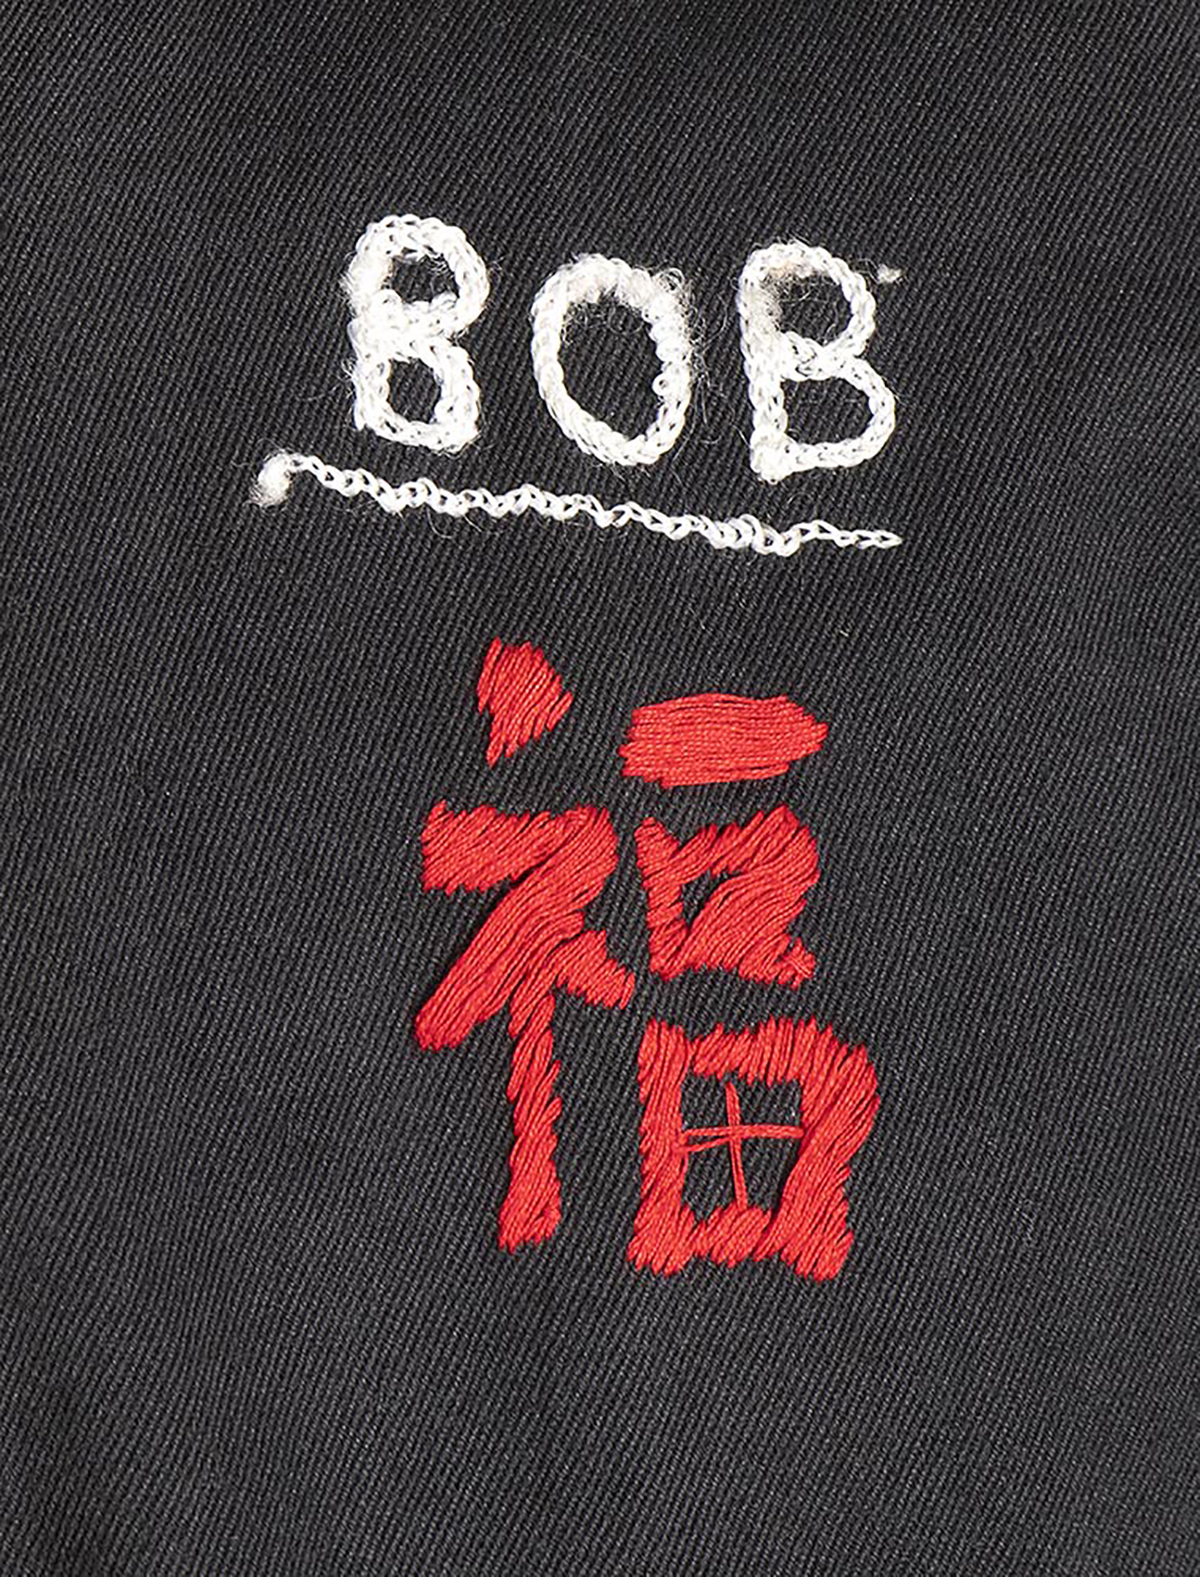 SUKAJAN BOMBER JACKET 1967 Black cotton embroidered sukajan Vietnam war jacket General Conditions - Image 5 of 5